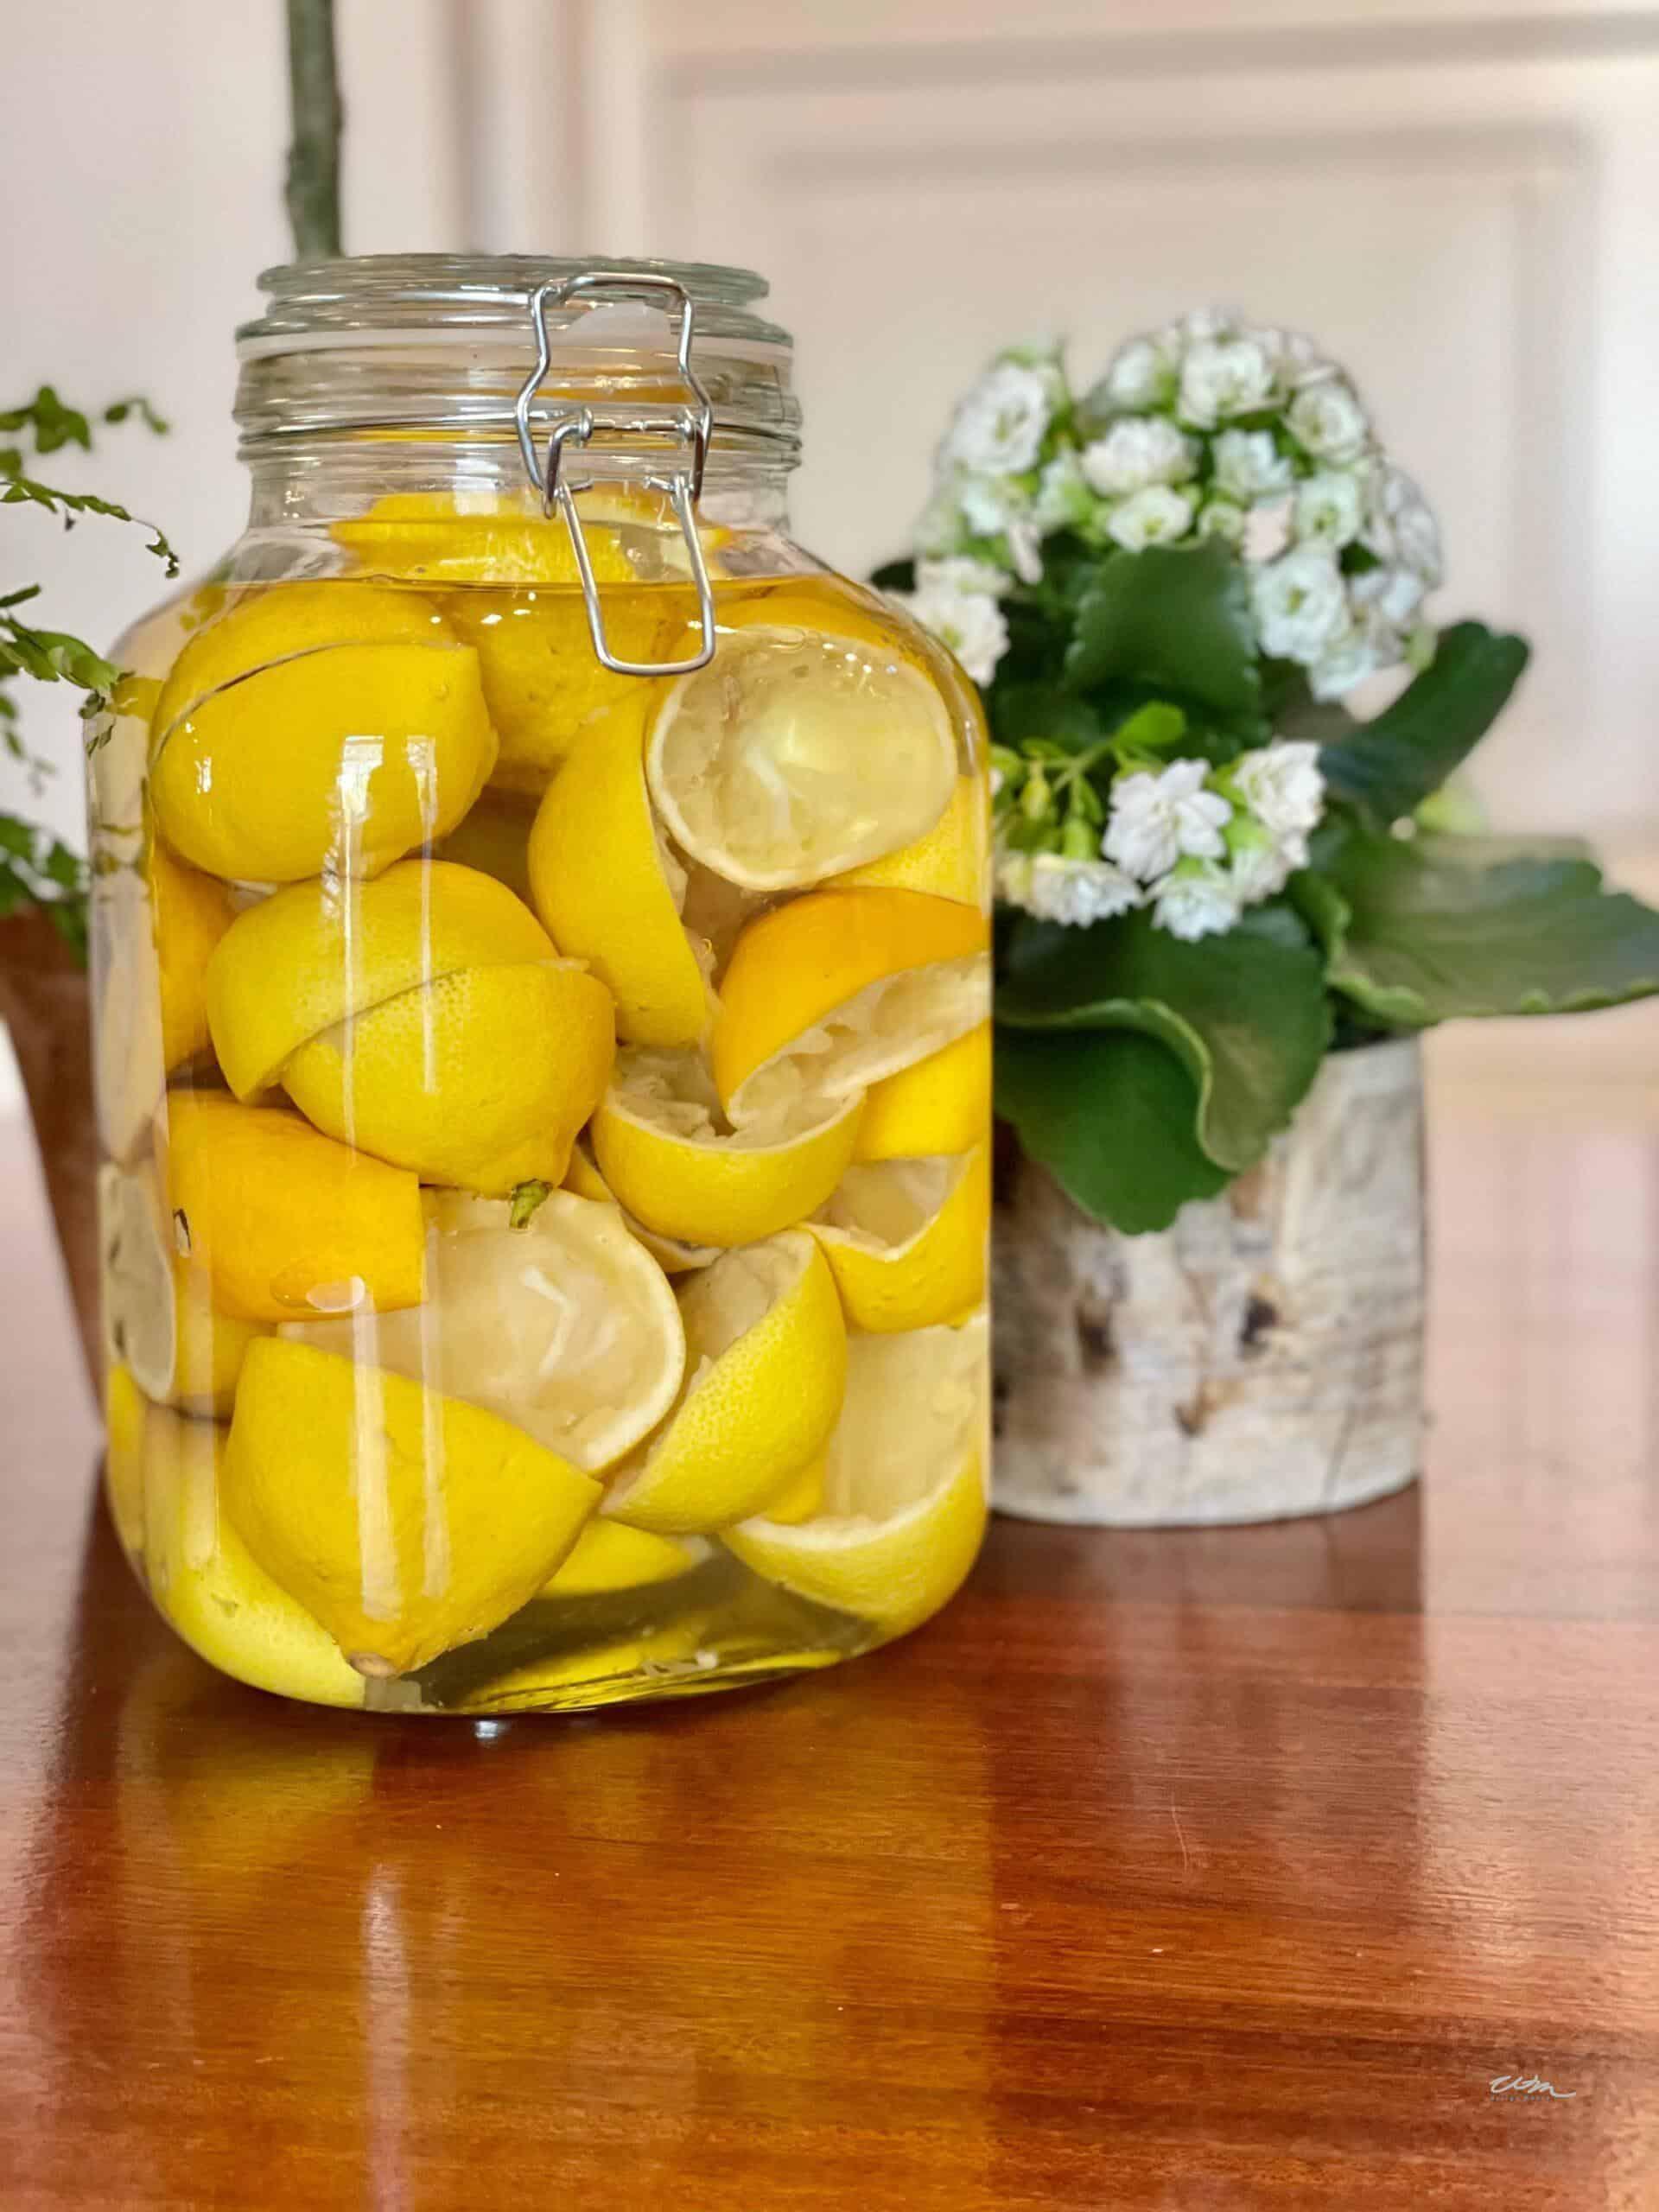 How to Re-purpose Bad Lemons  into Something Useful